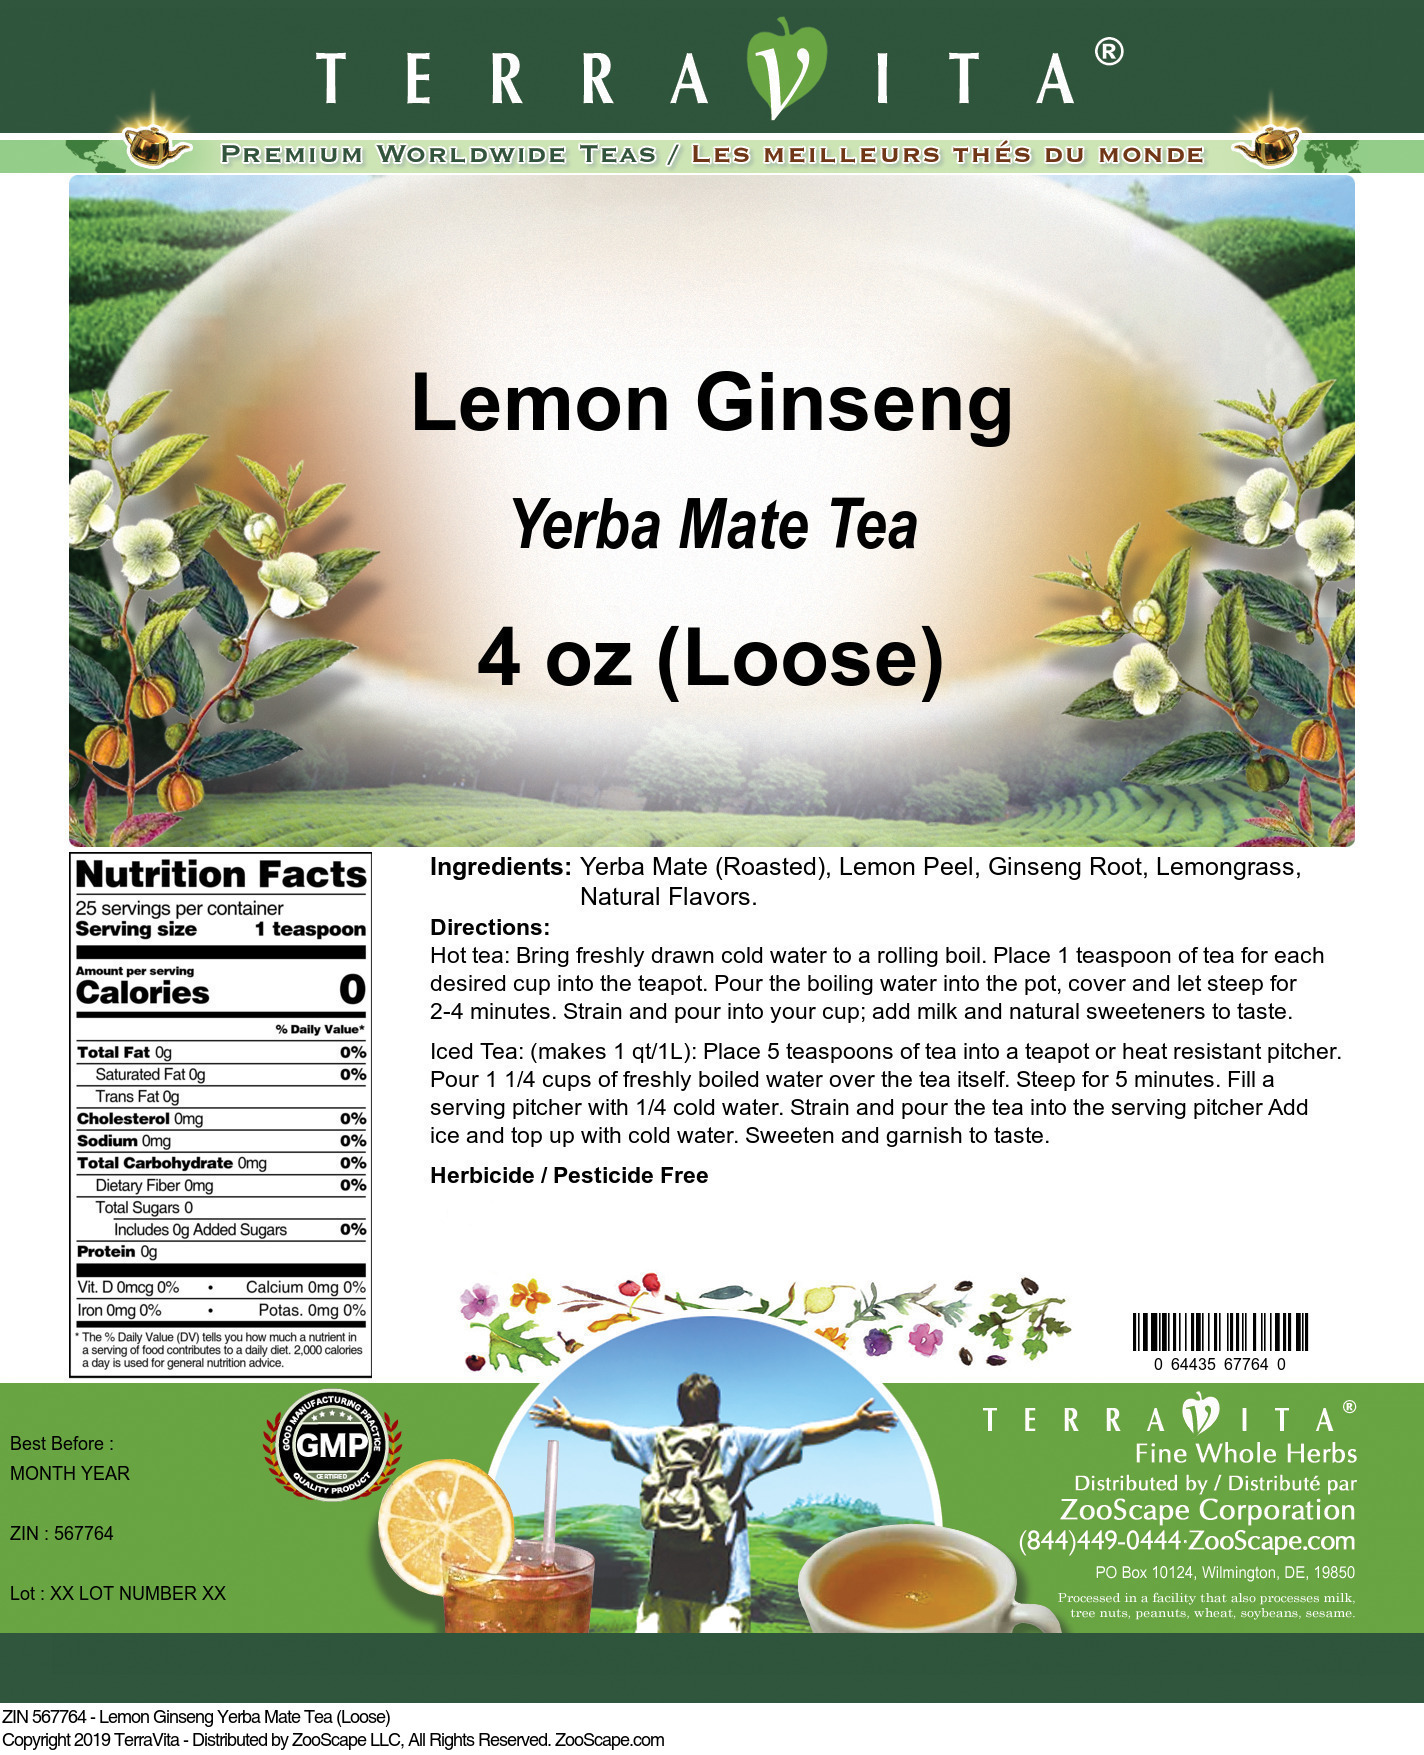 Lemon Ginseng Yerba Mate Tea (Loose) - Label